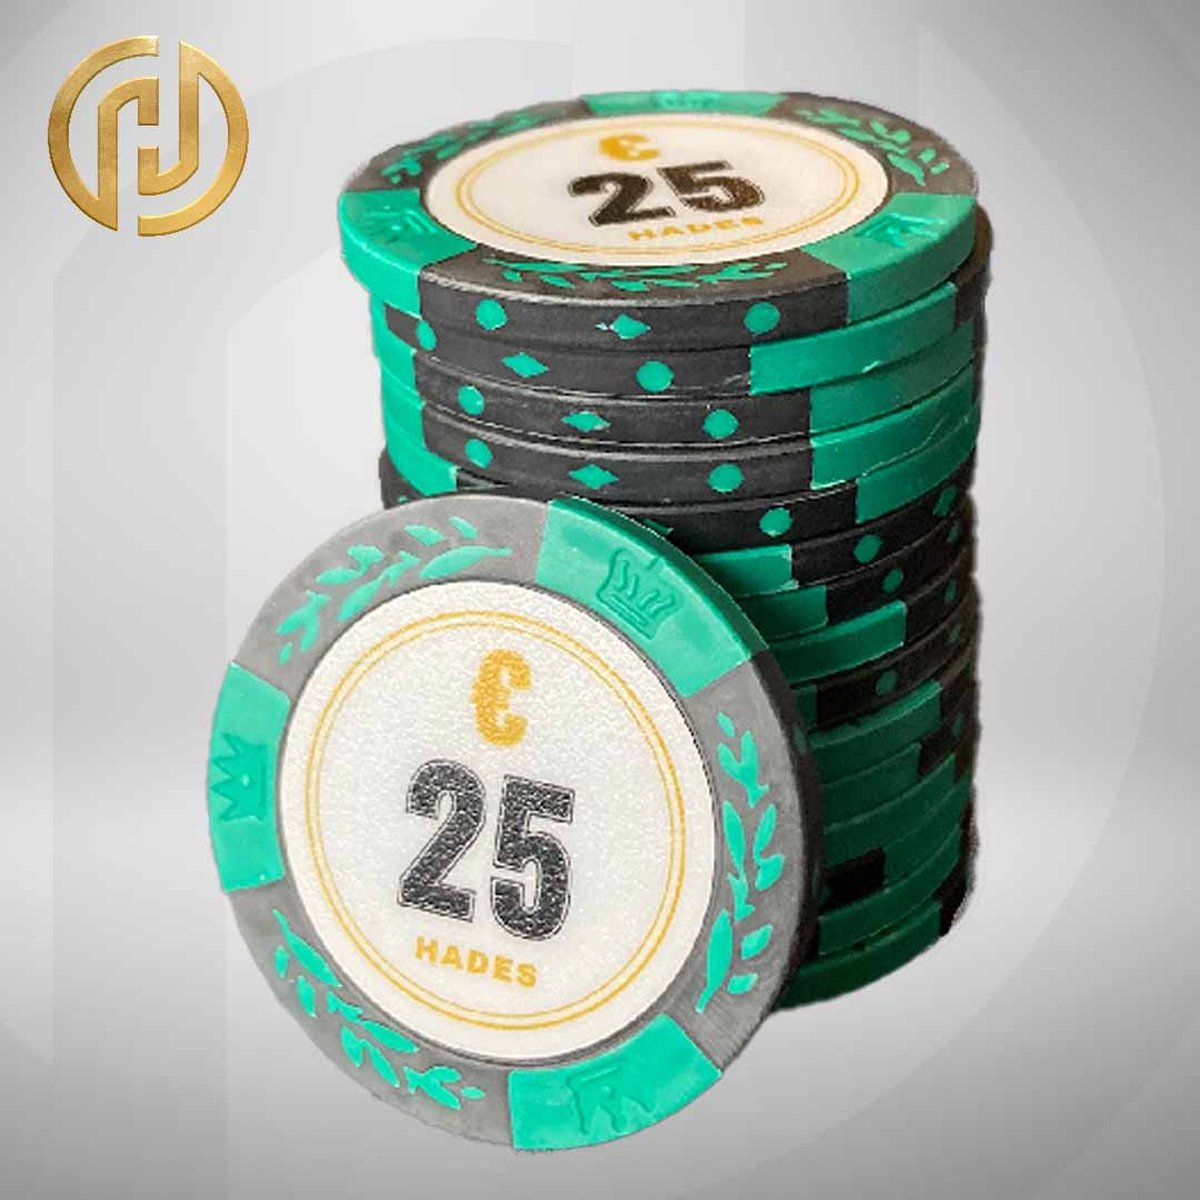 Mec Hades Cashgame Classic Poker Chips €25 groen (25 stuks) pokerchips pokerfiches poker fiches clay chips pokerspel pokerset poker set